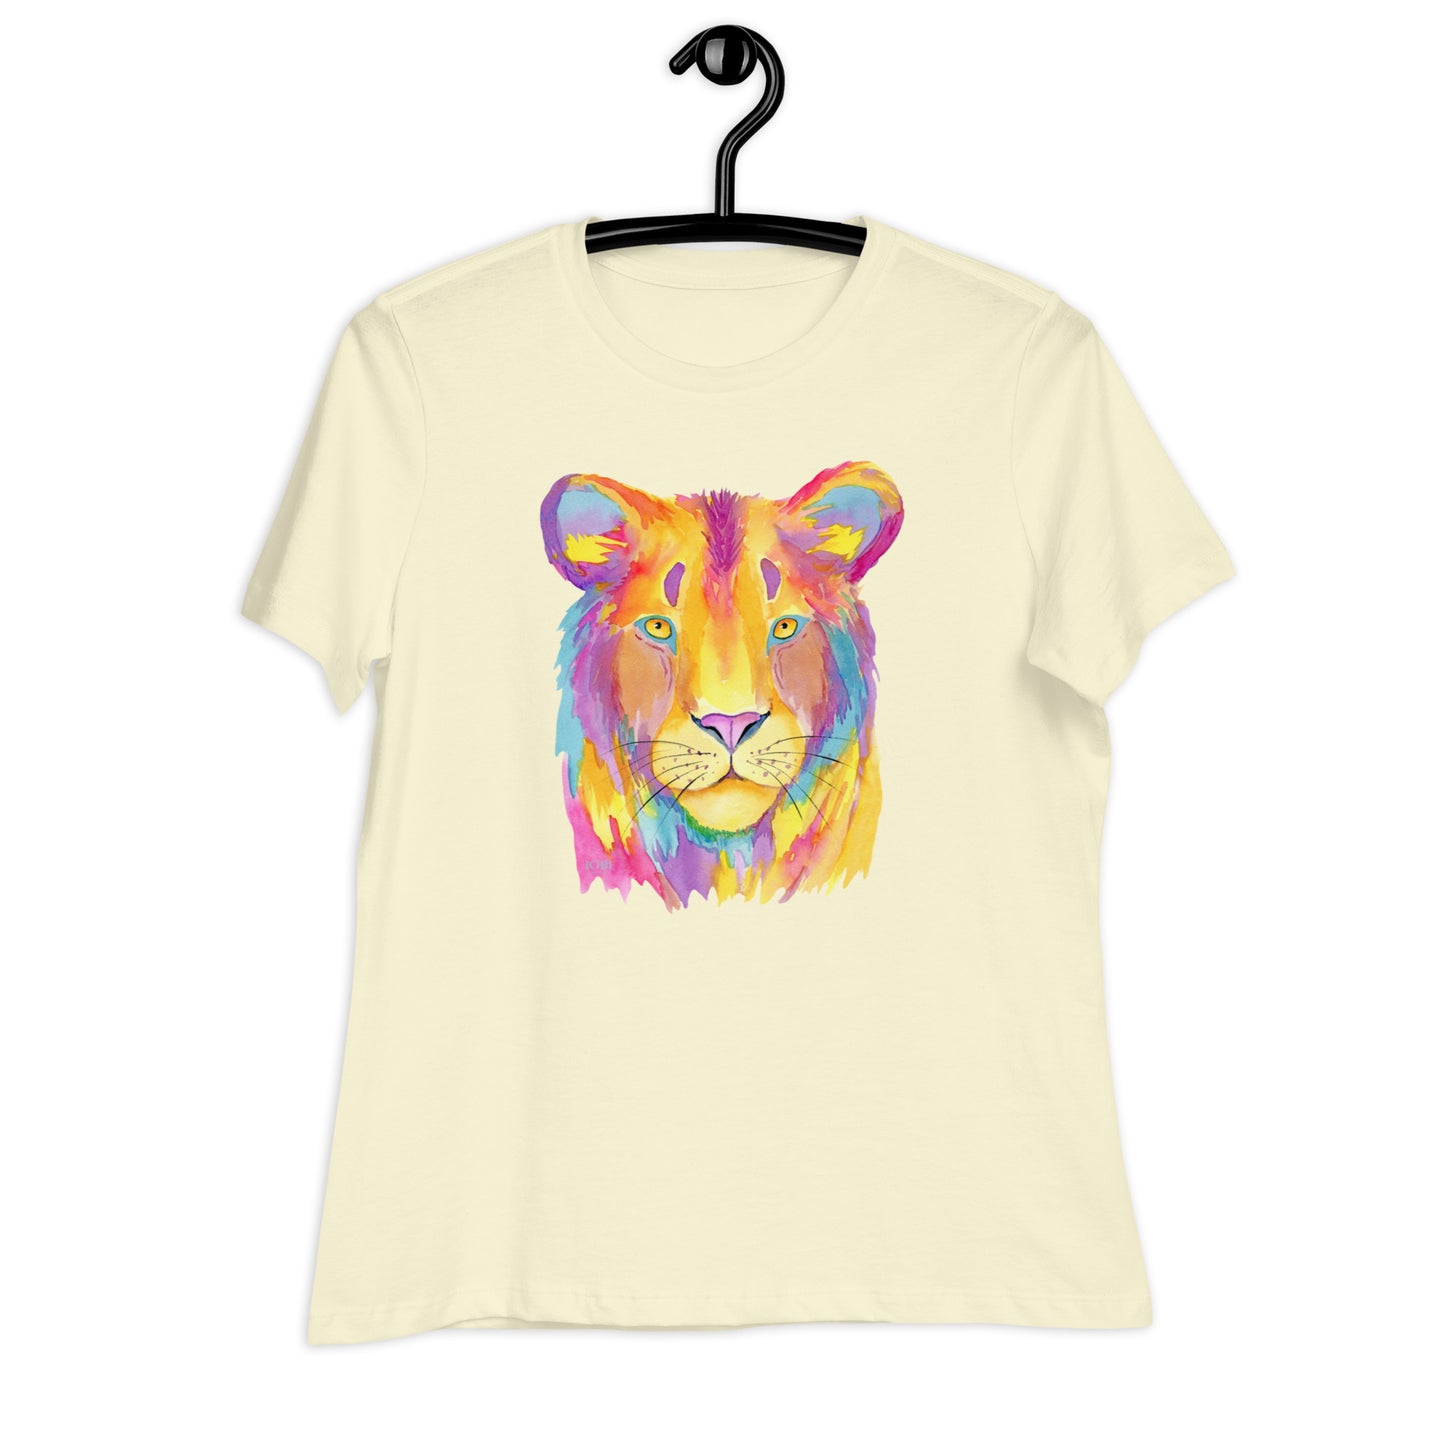 Women's Relaxed Soft & Smooth Premium Quality T-Shirt Colorful Tiger Design by IOBI Original Apparel